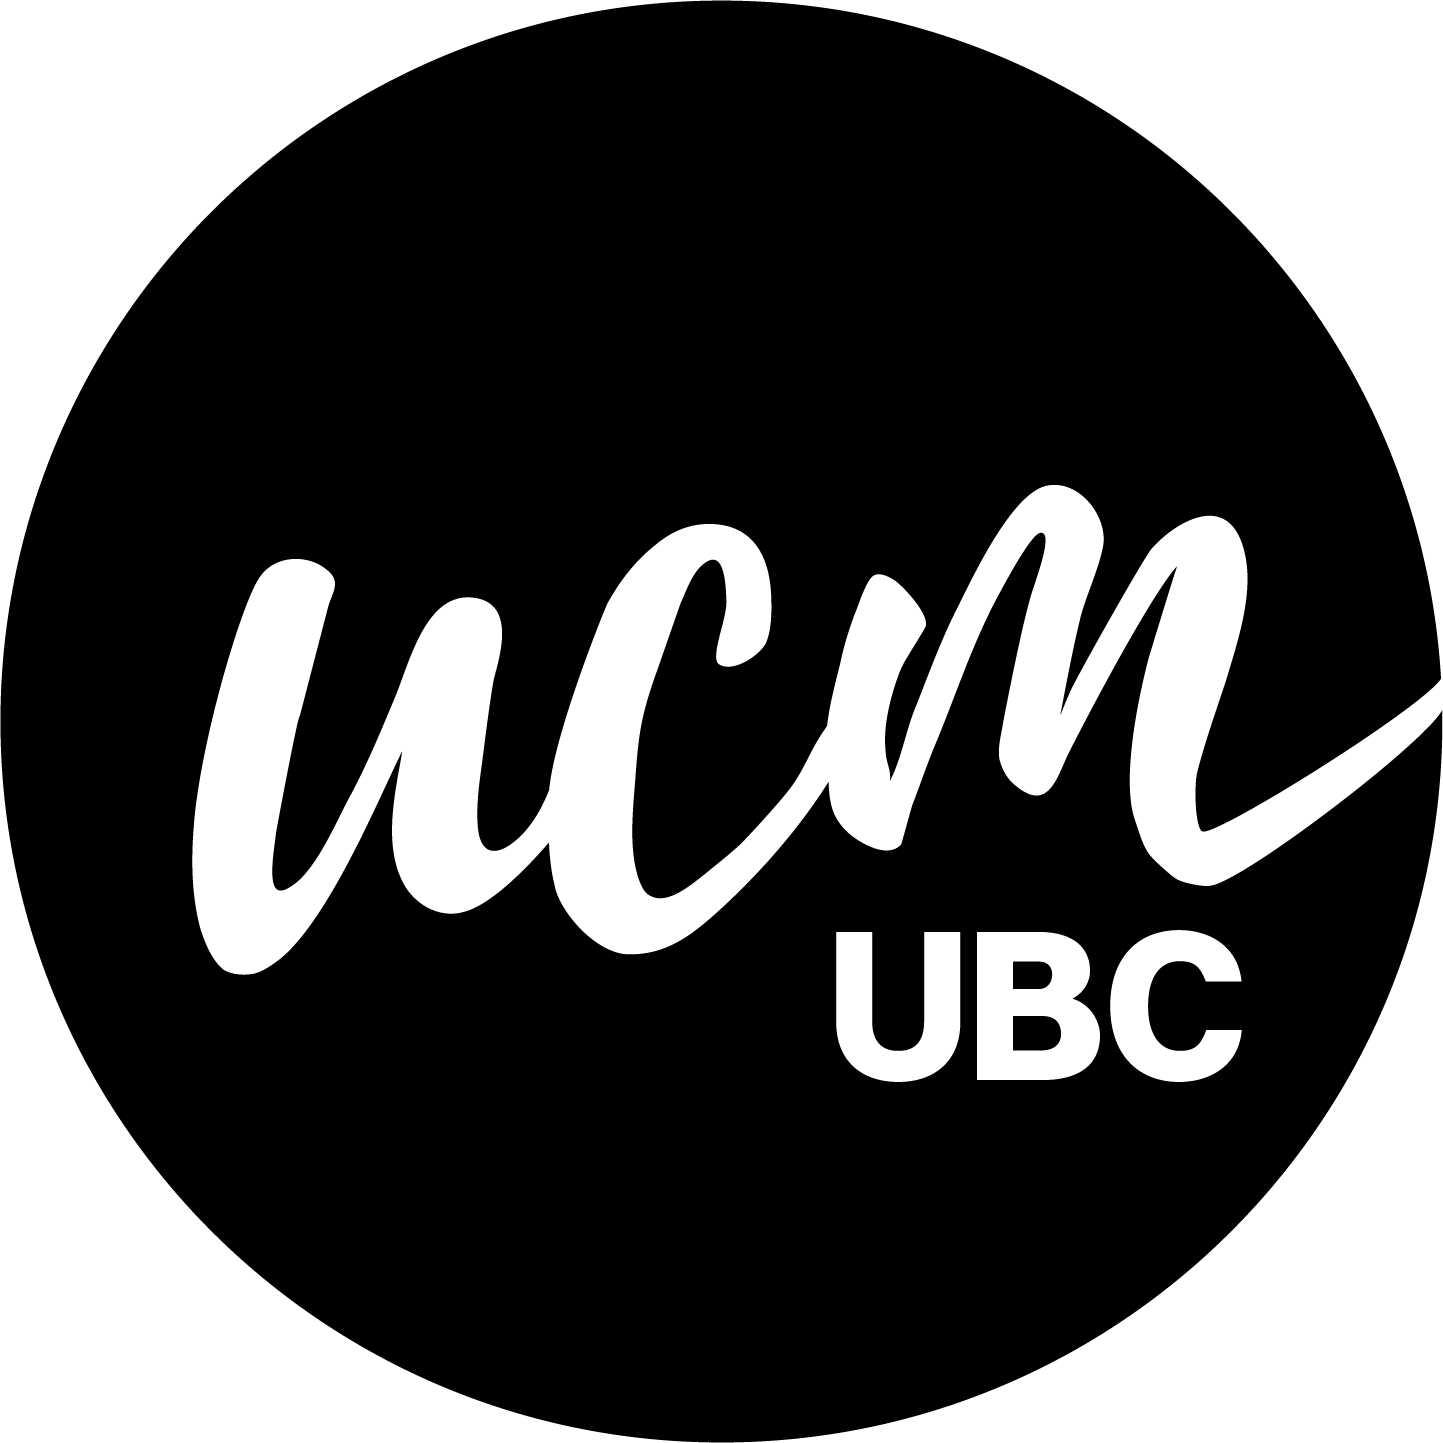 University Christian Ministries – UNIVERSITY of BRITISH COLUMBIA typography logo